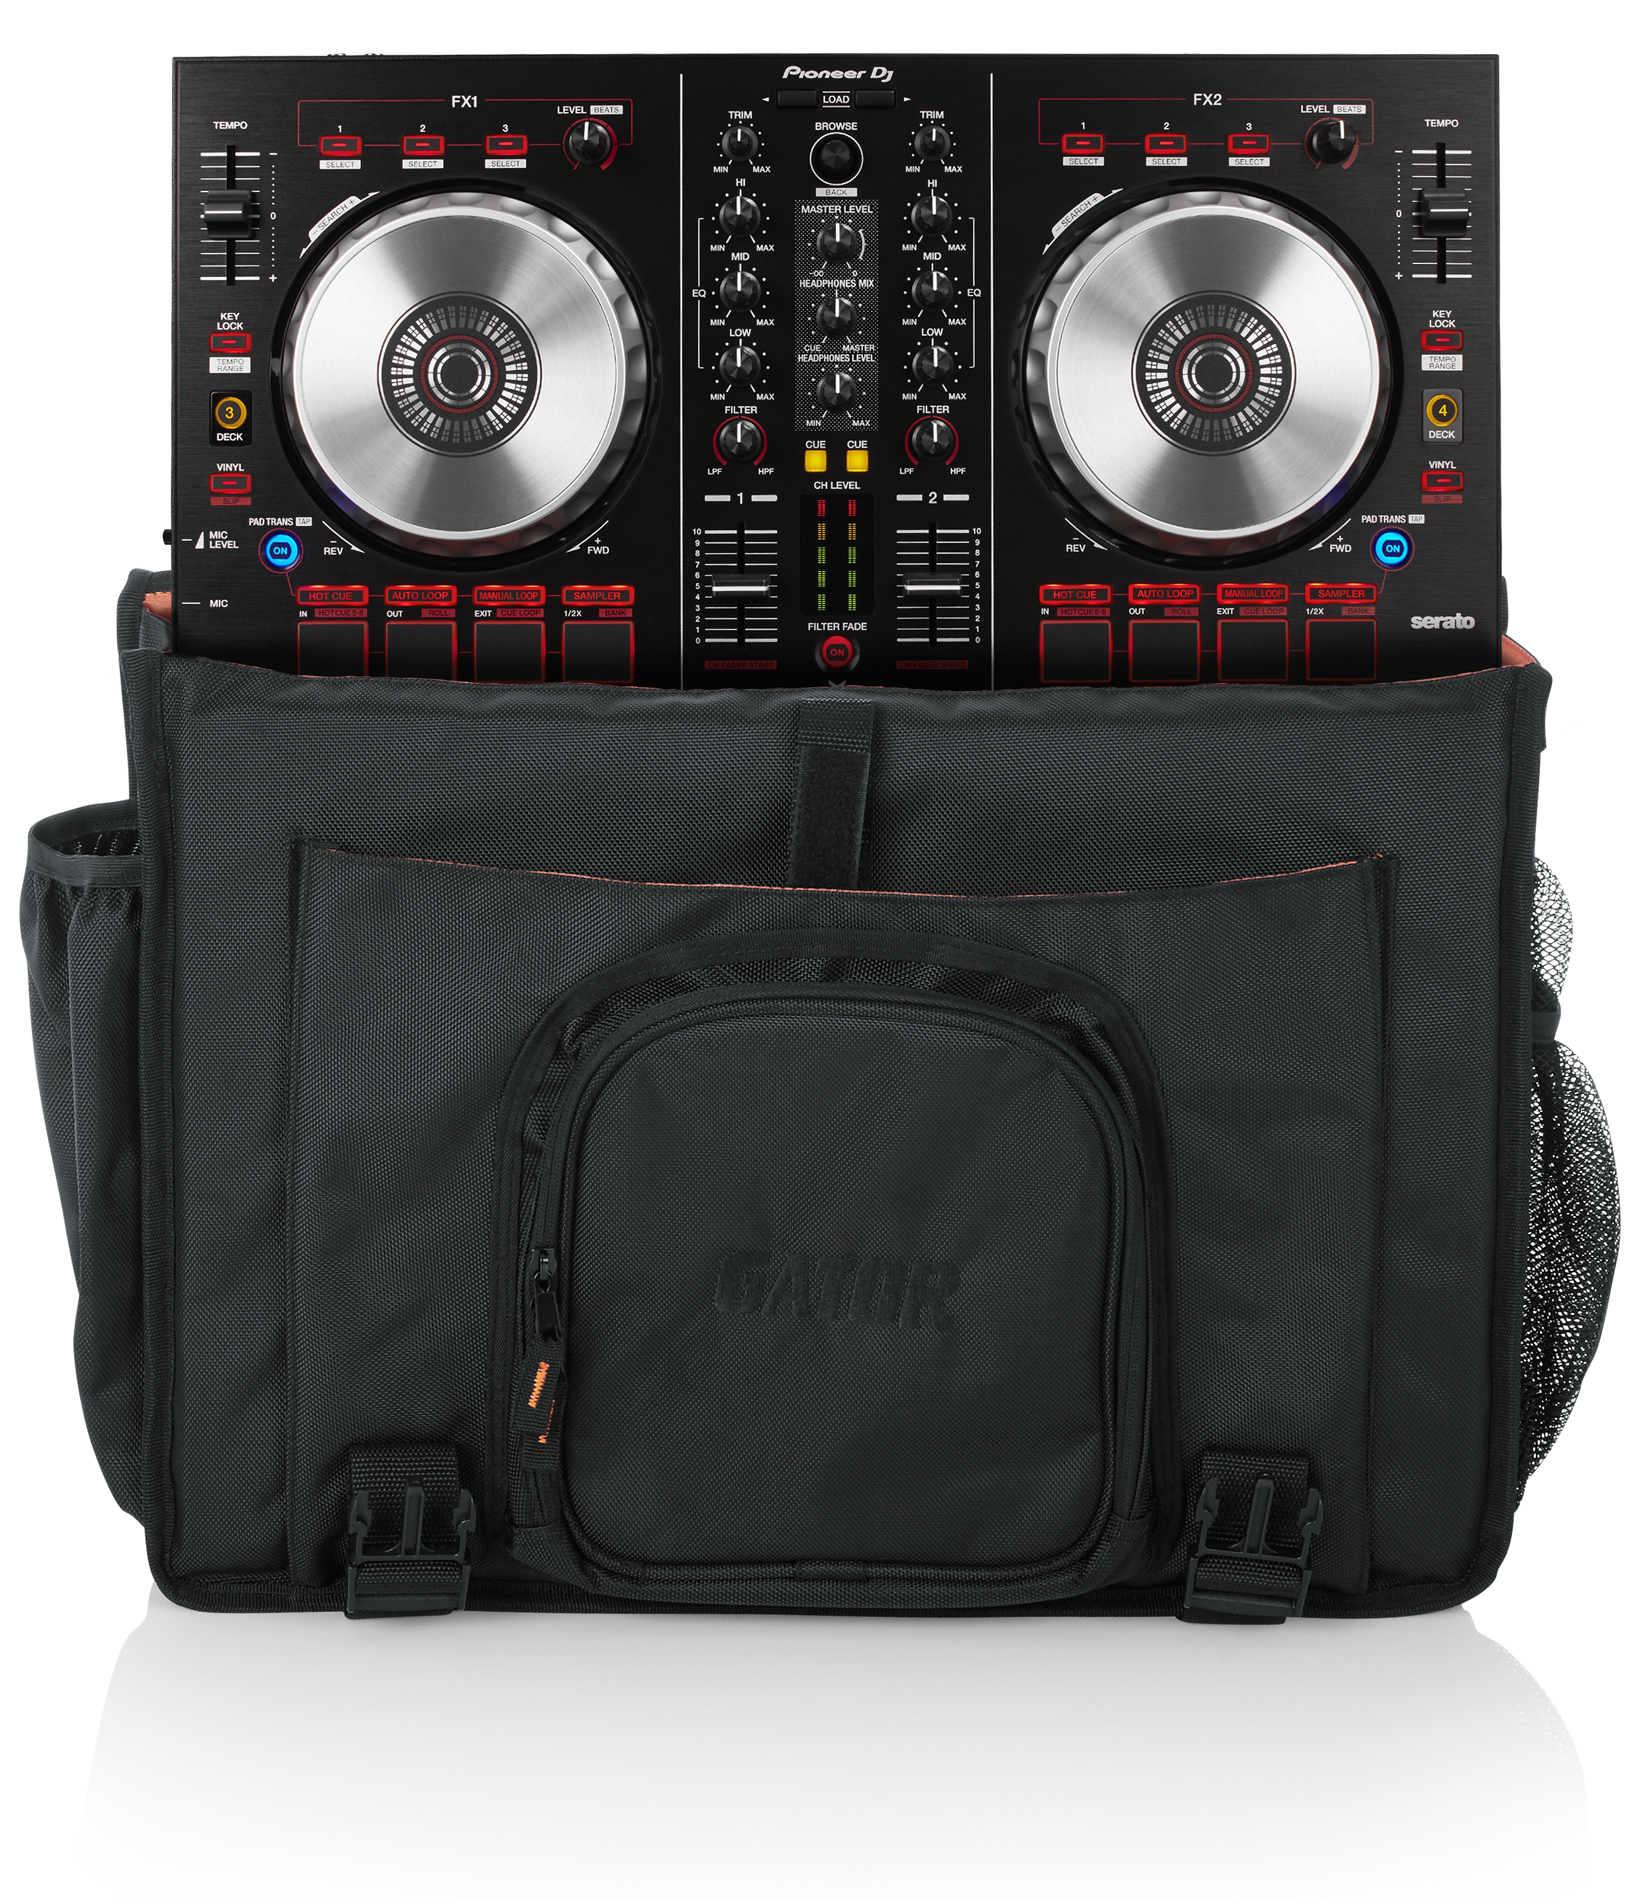 Messenger bag for DJ style Midi controller